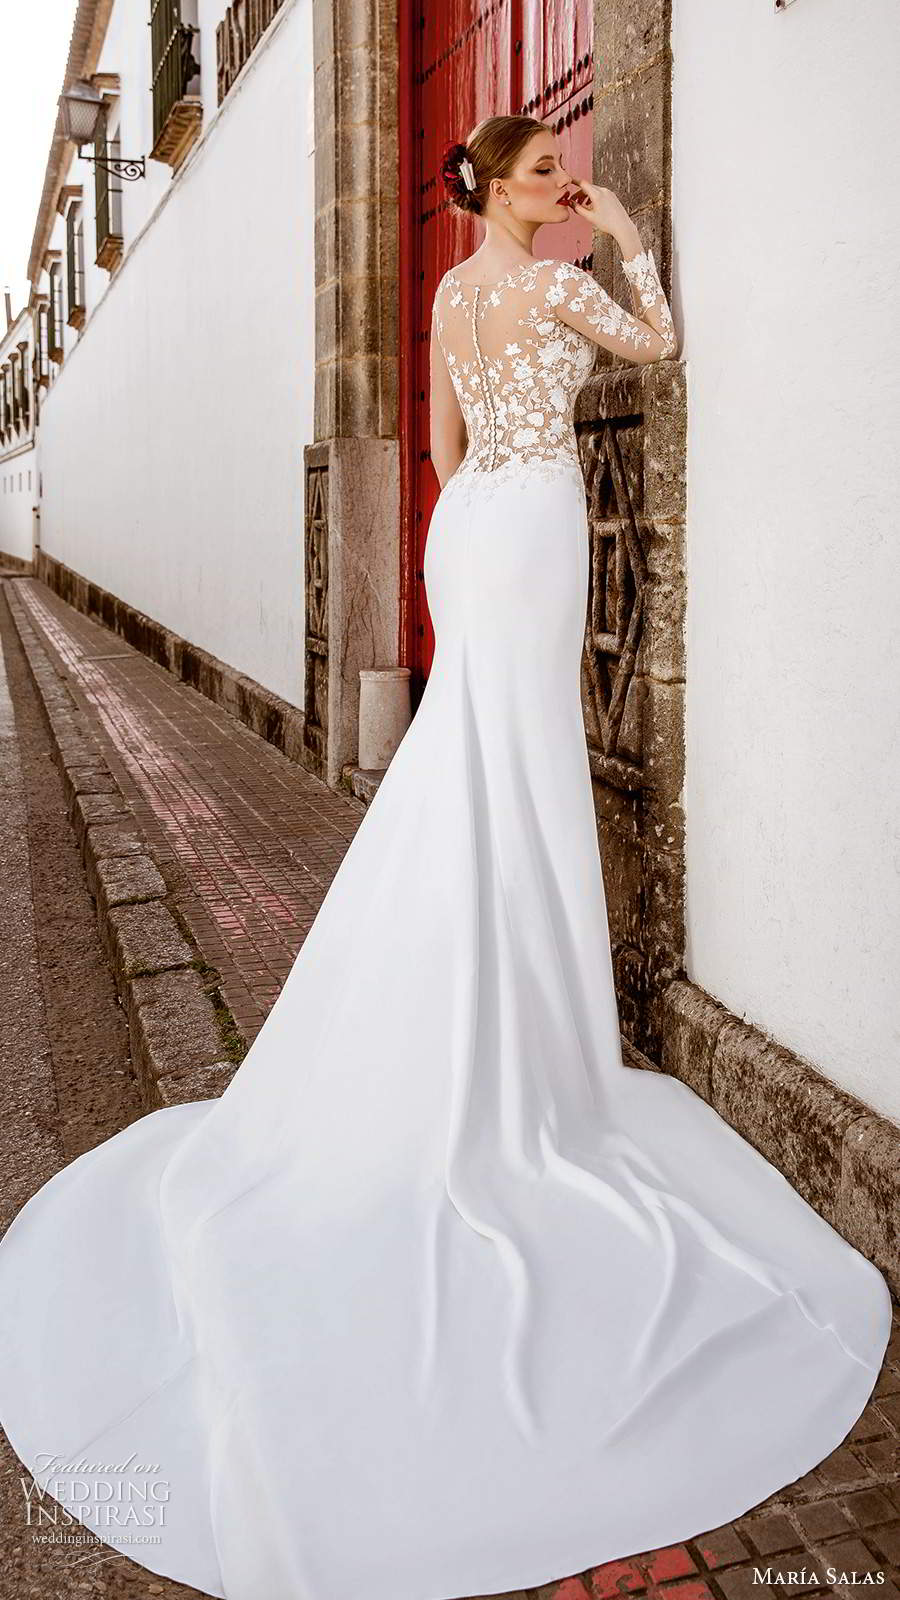 maria salas 2019 bridal illusion long sleeves v neckline embellished bodice clean skirt sheath wedding dress chapel train (11) bv